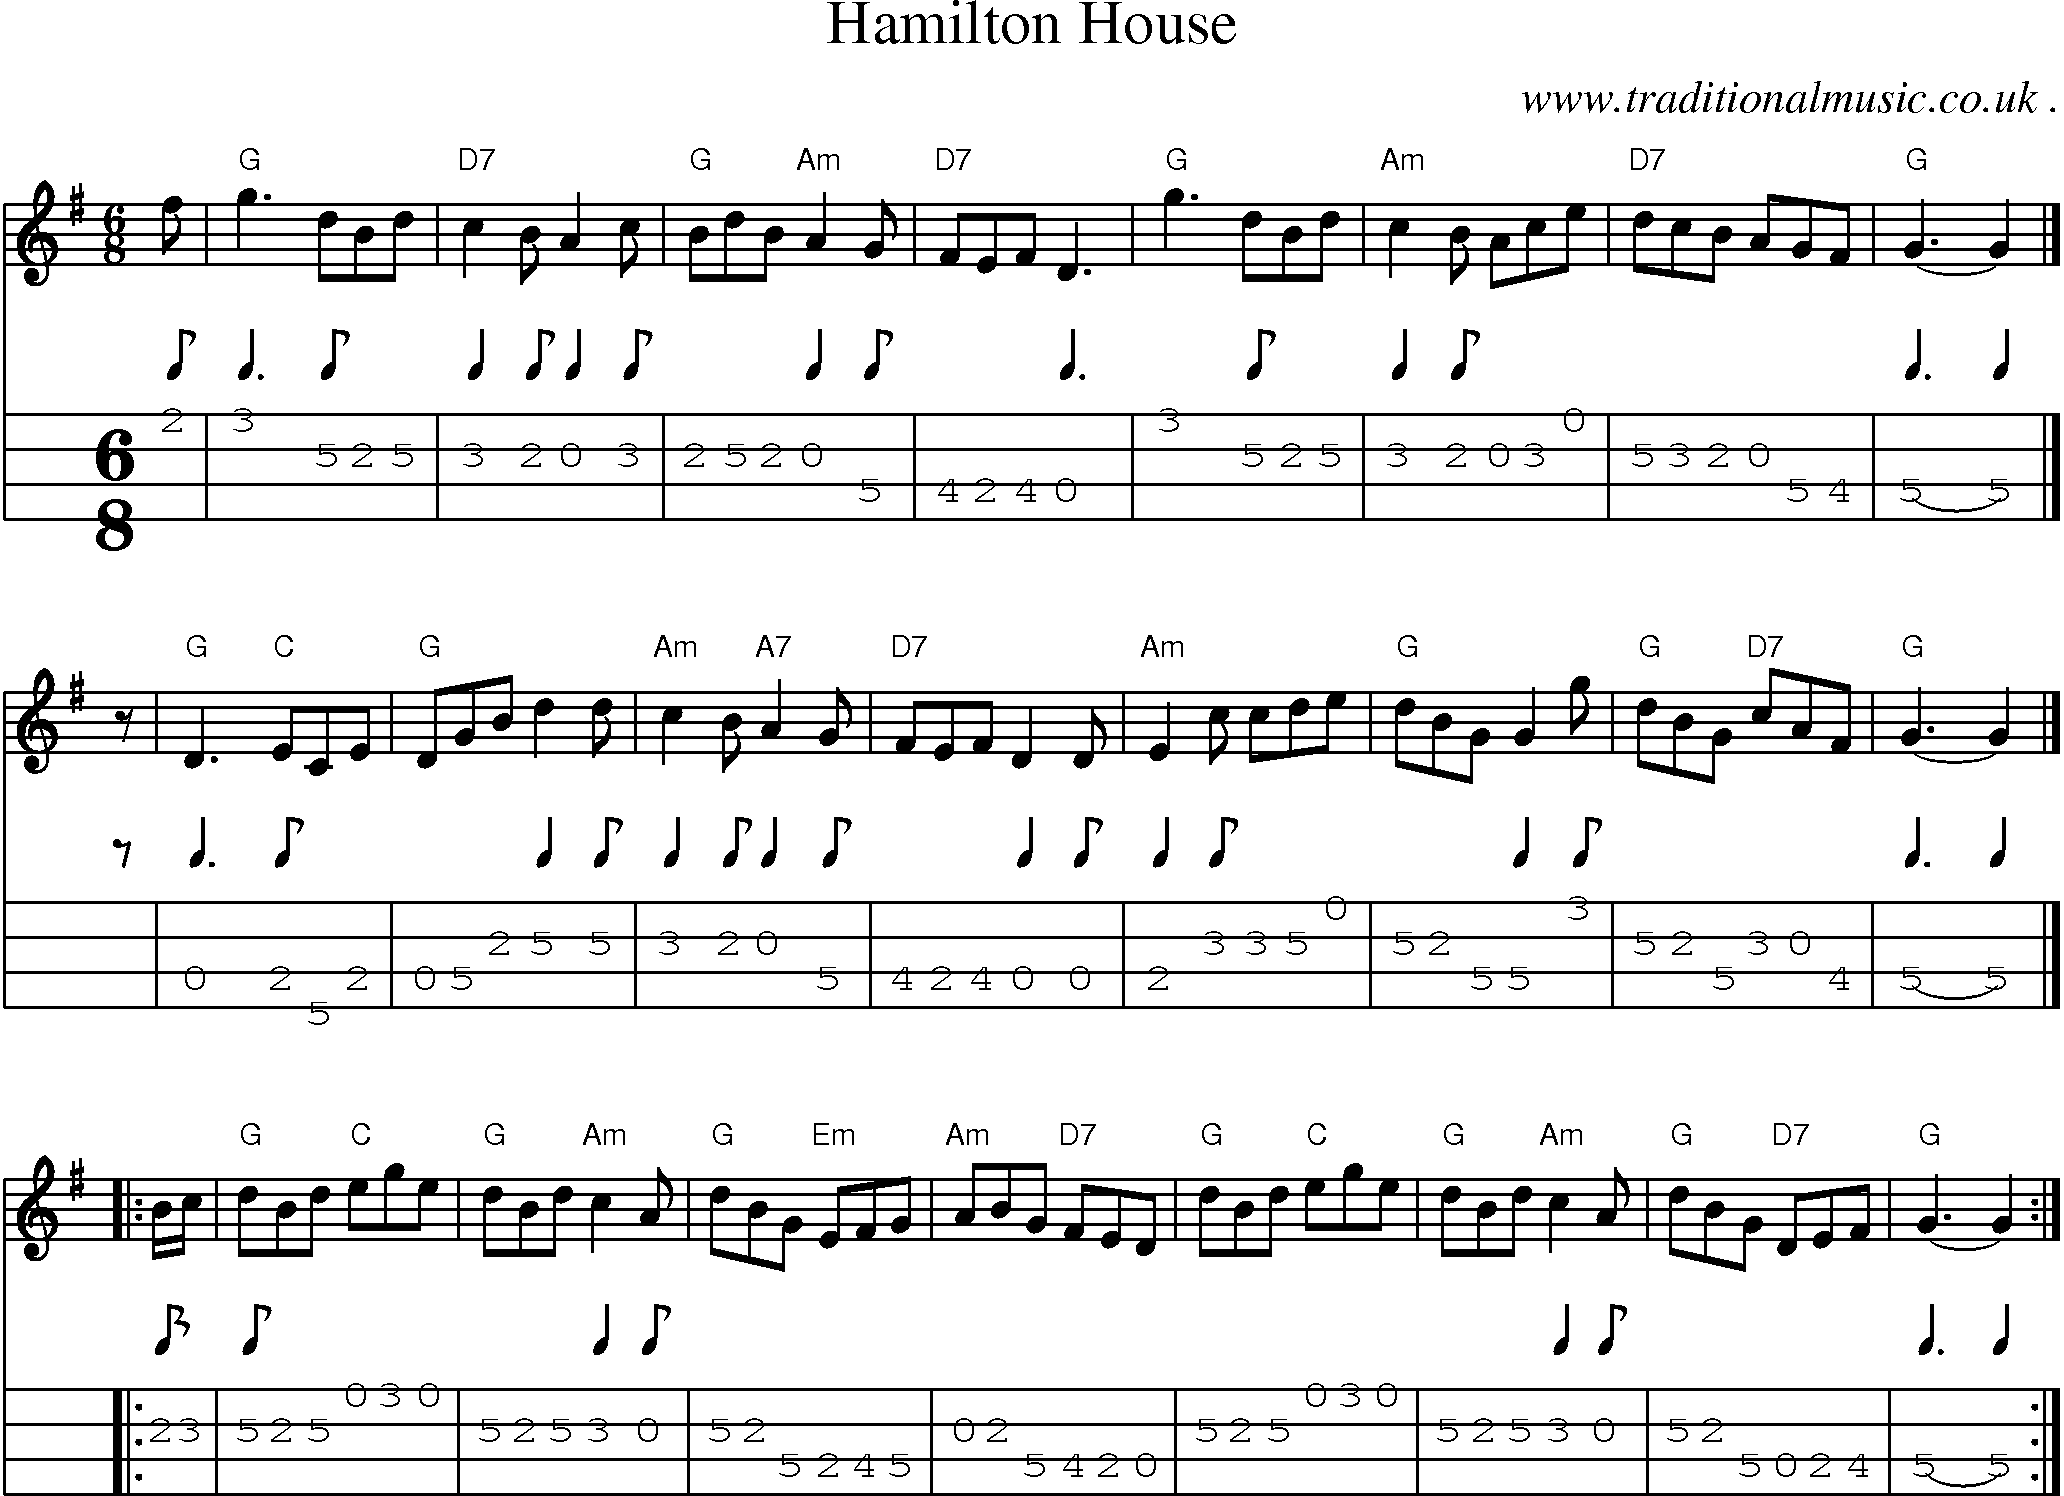 Sheet-music  score, Chords and Mandolin Tabs for Hamilton House